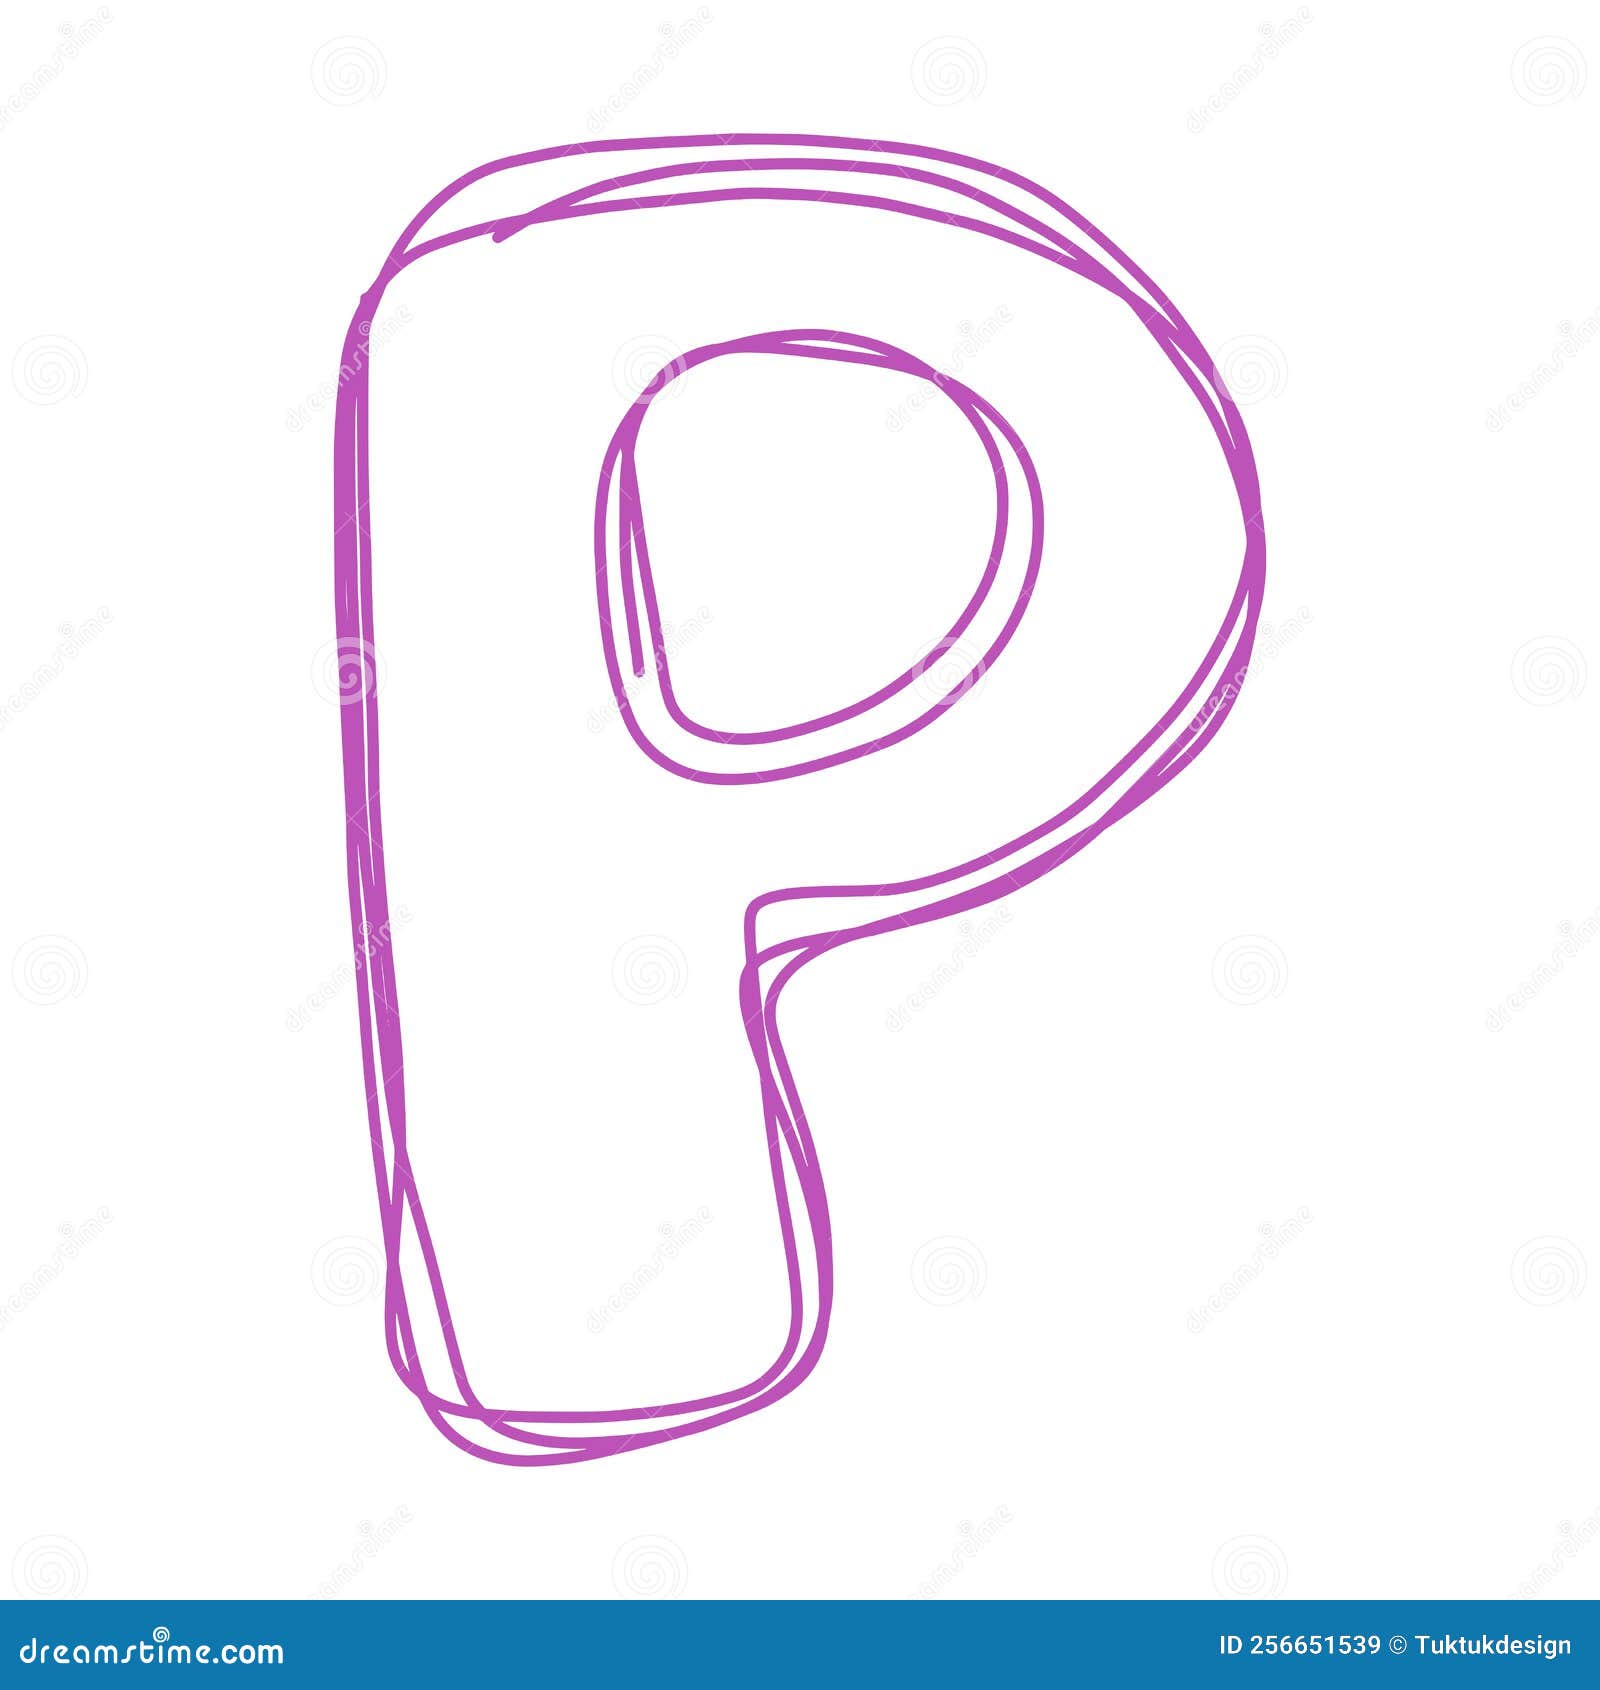 Alphabet P Letter Hand Drawn Outline Stroke Drawing Illustration ...